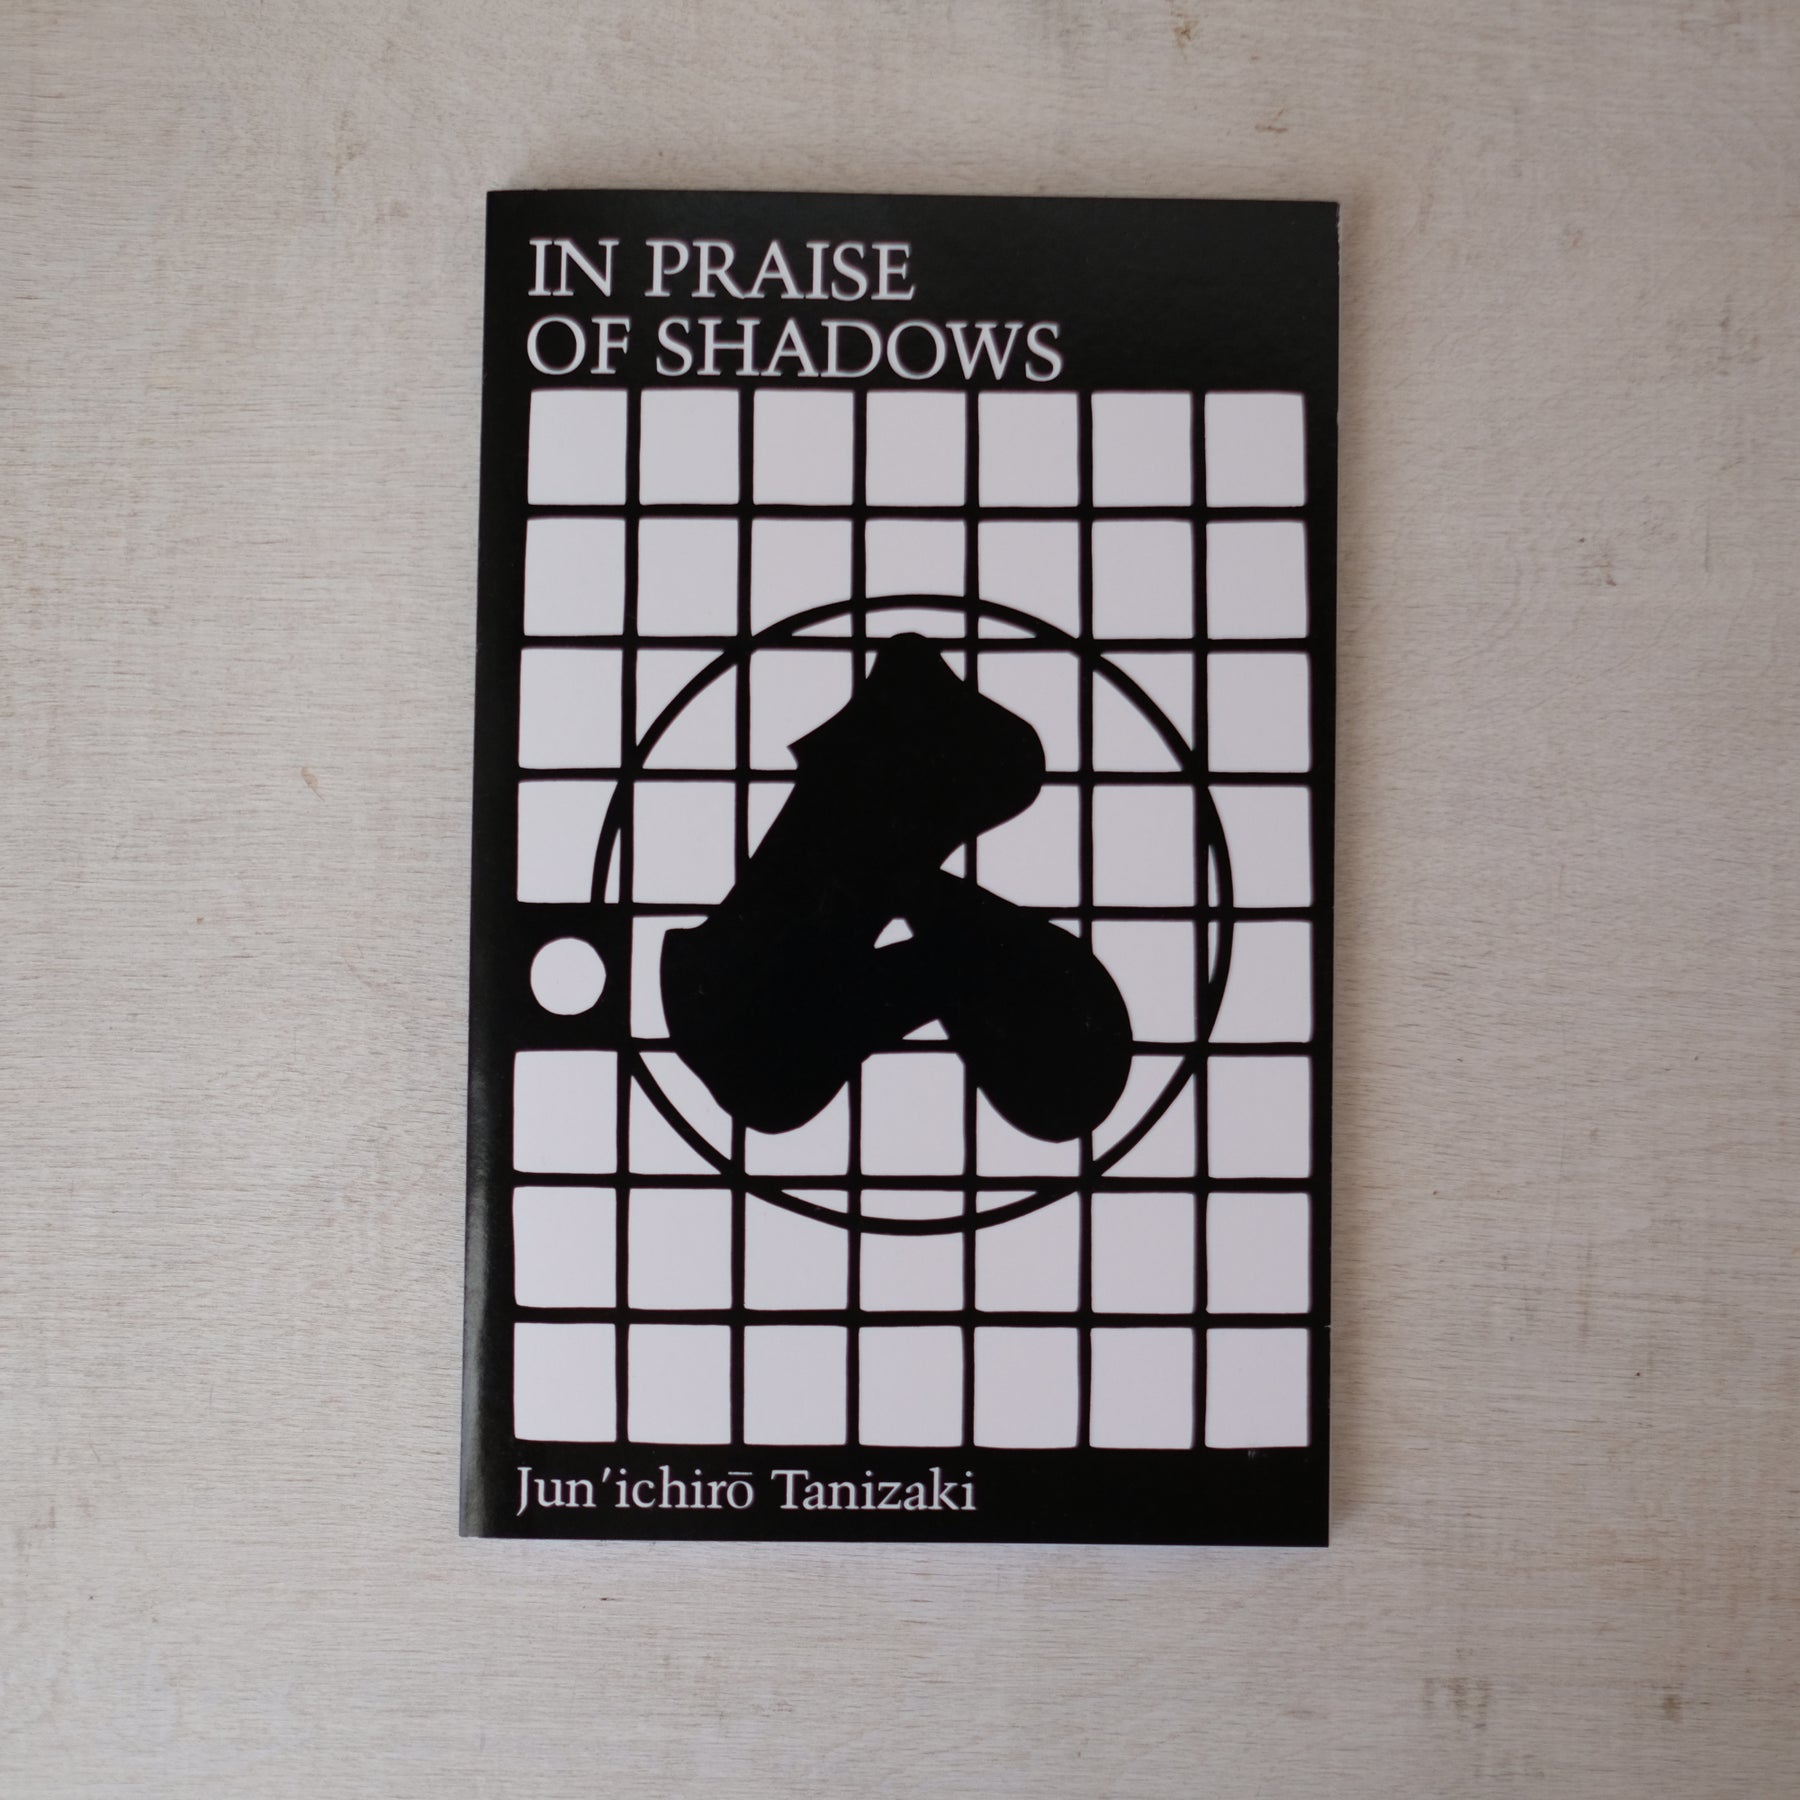 In Praise of Shadows by Jun'ichiro Tanizaki